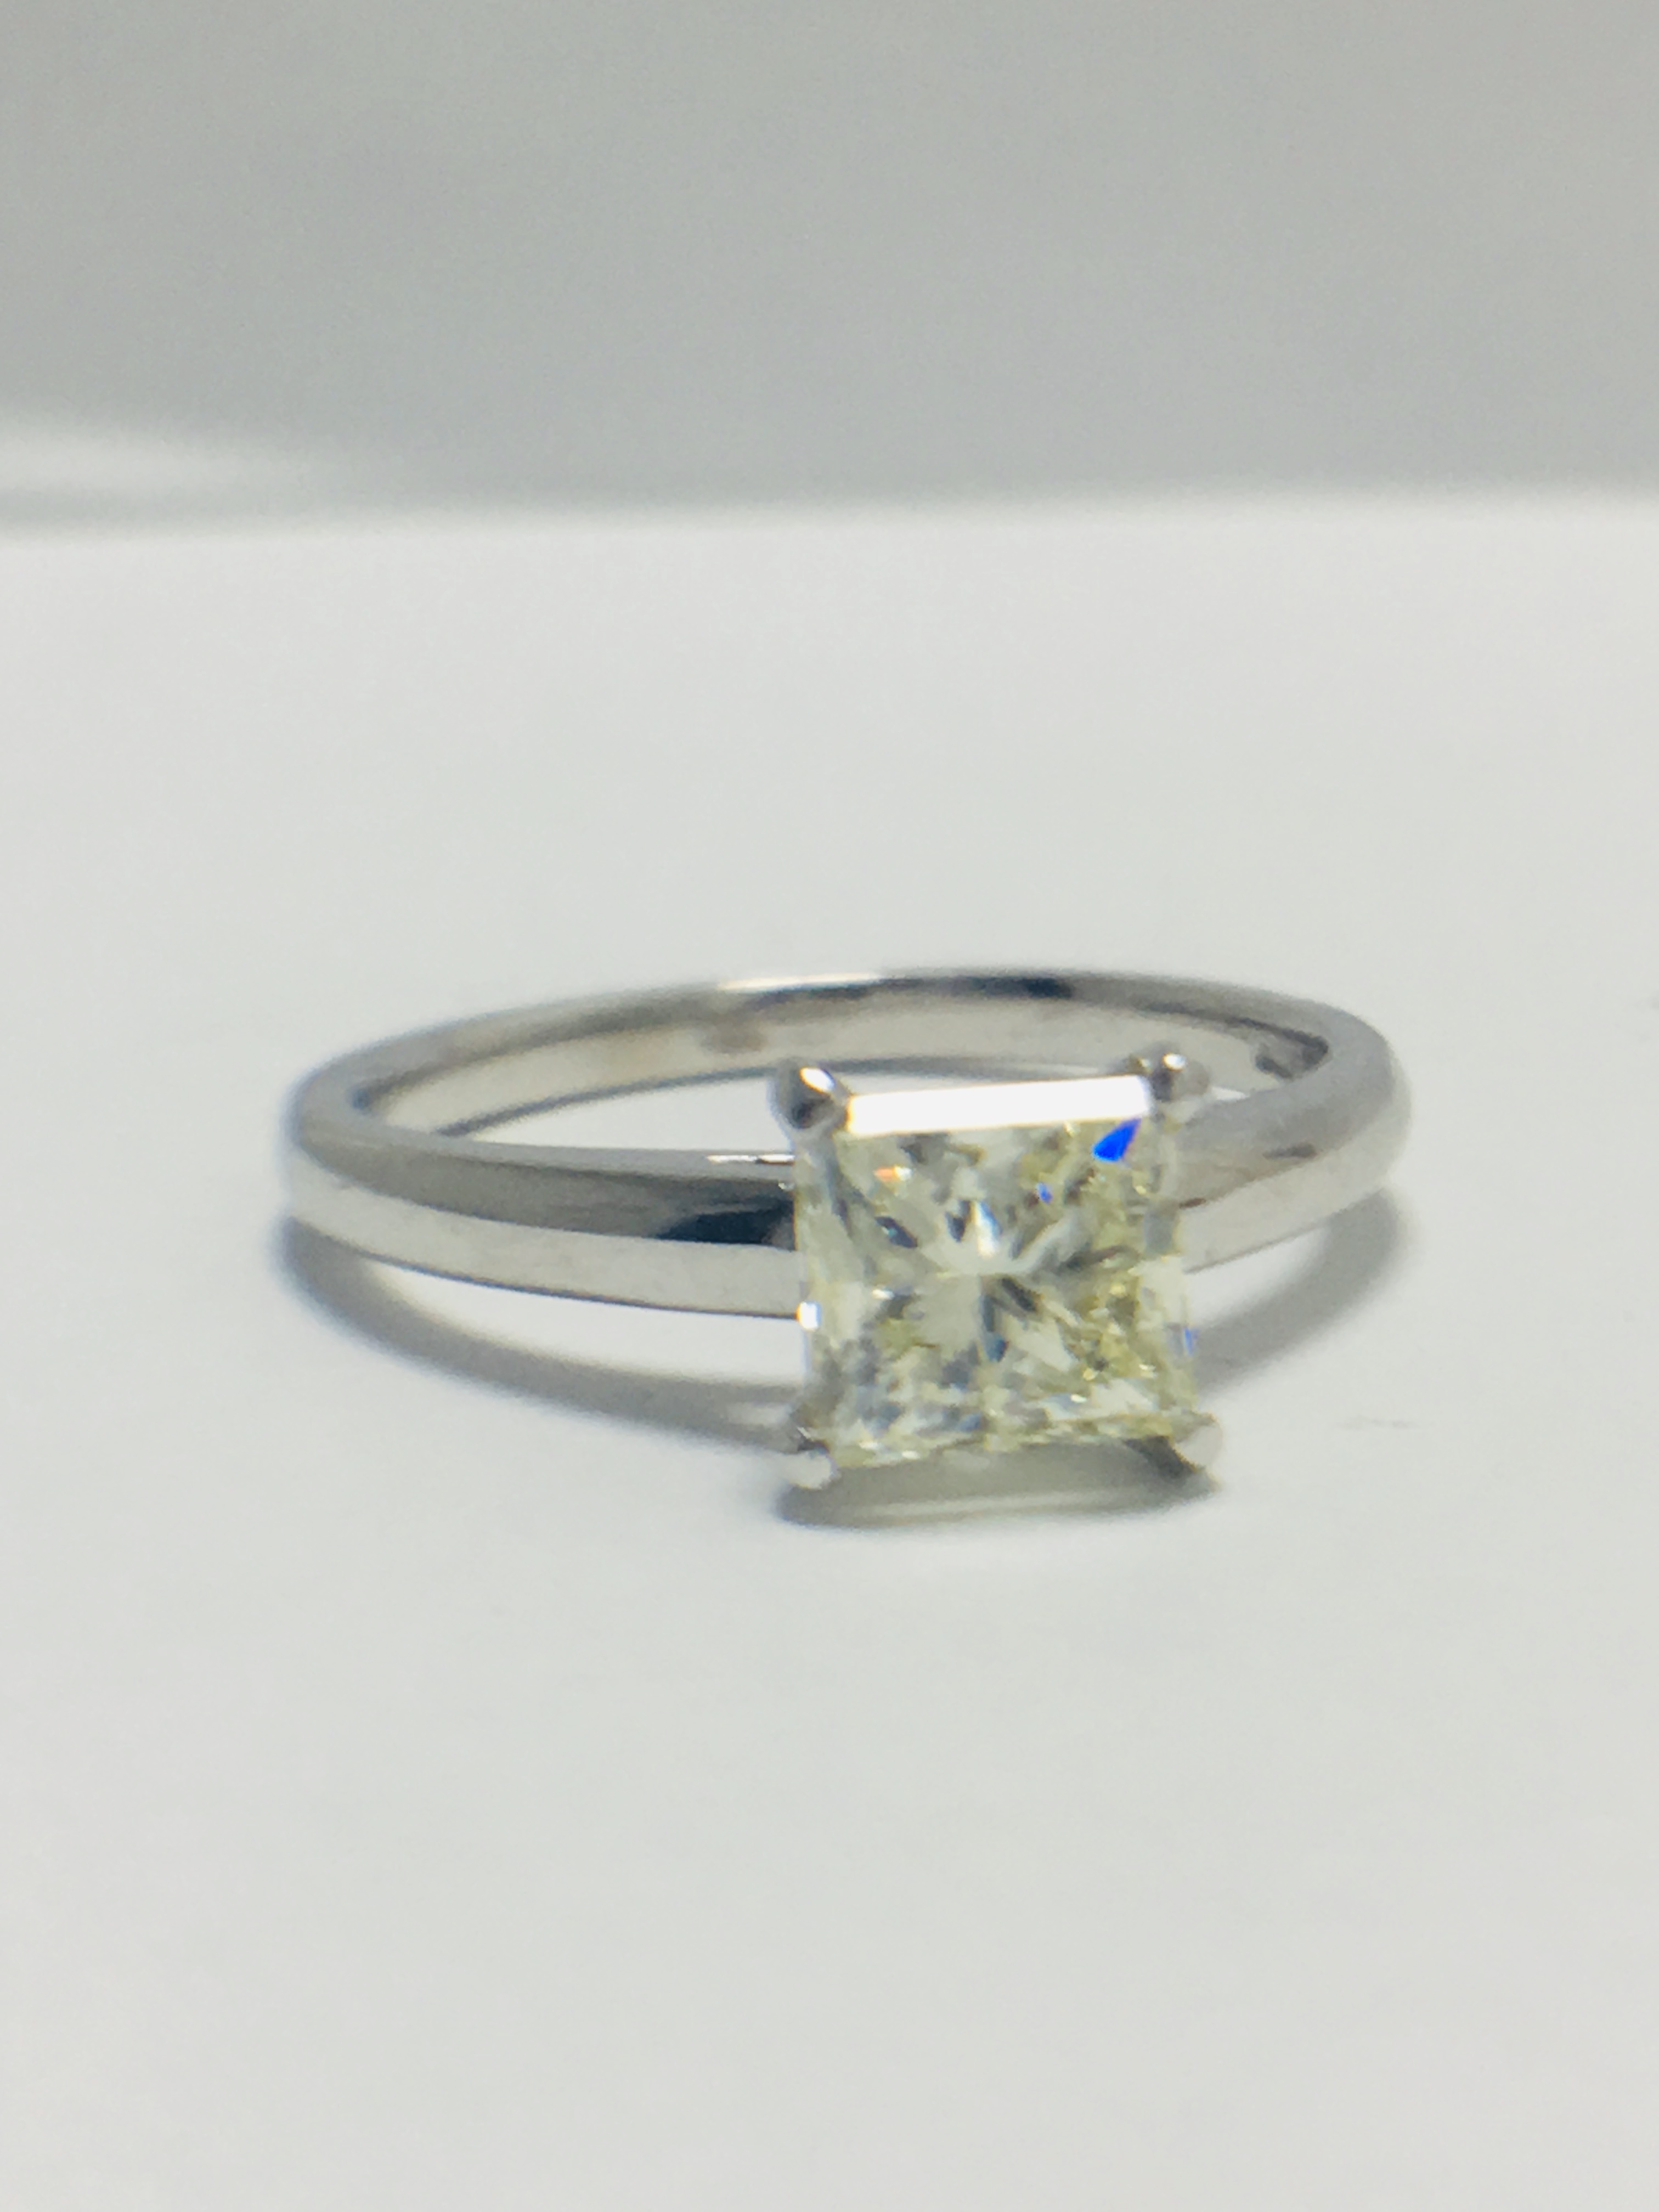 1ct Natural Princes Cut diamond platinum ring - Image 8 of 10